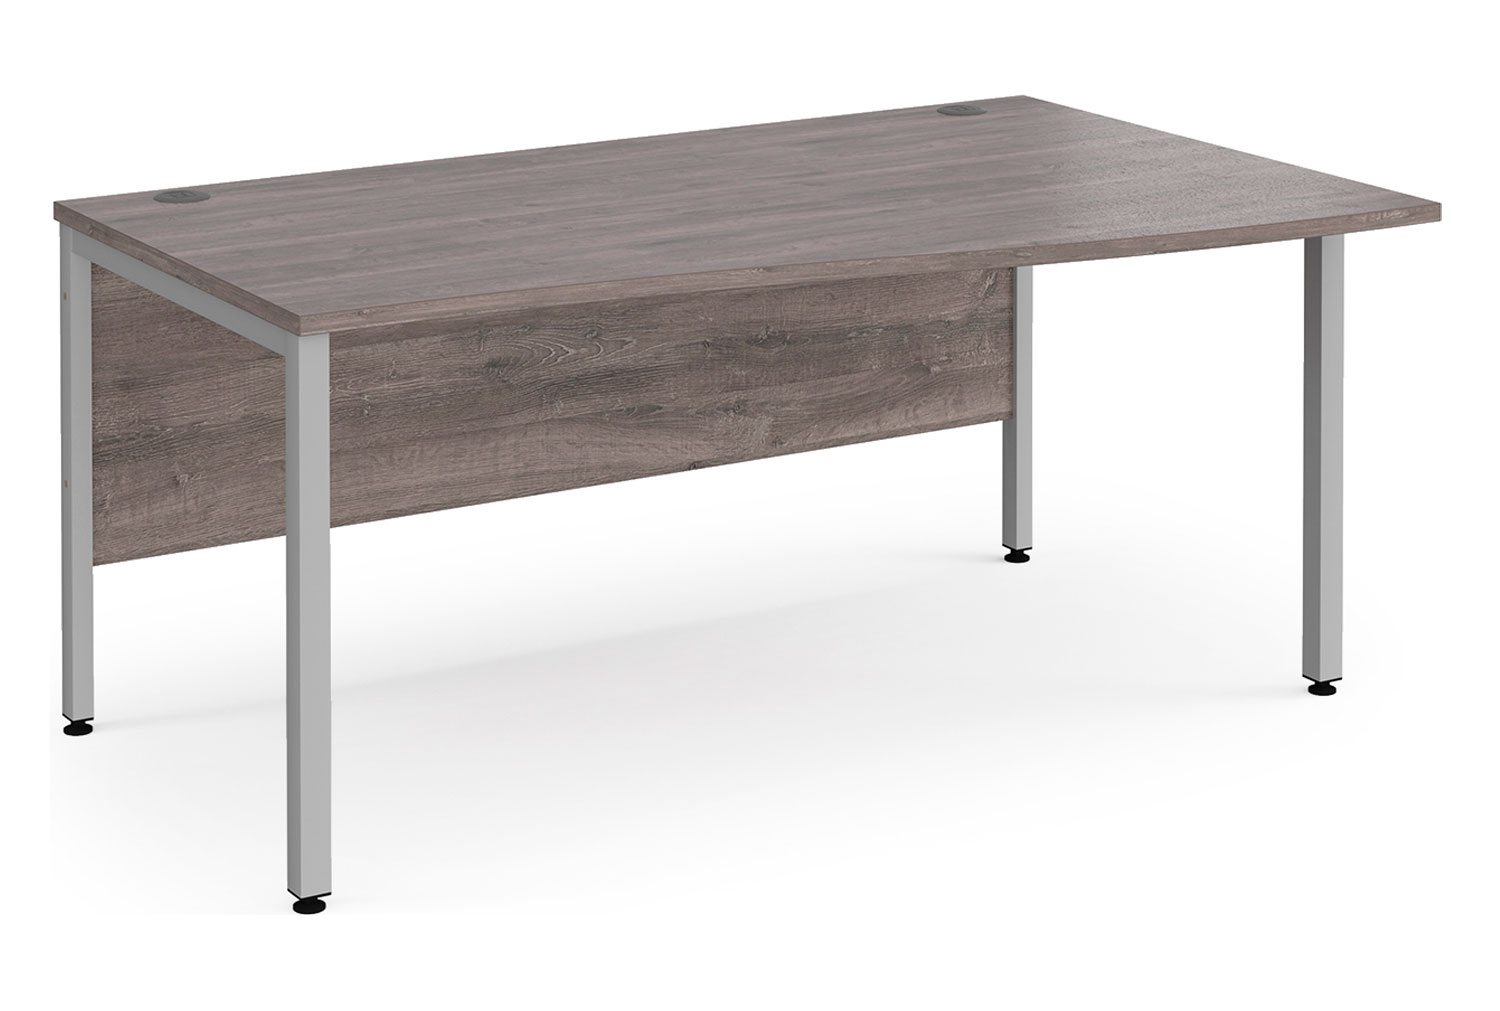 Value Line Deluxe Bench Right Hand Wave Office Desks (Silver Legs), 160wx80/99dx73h (cm), Grey Oak